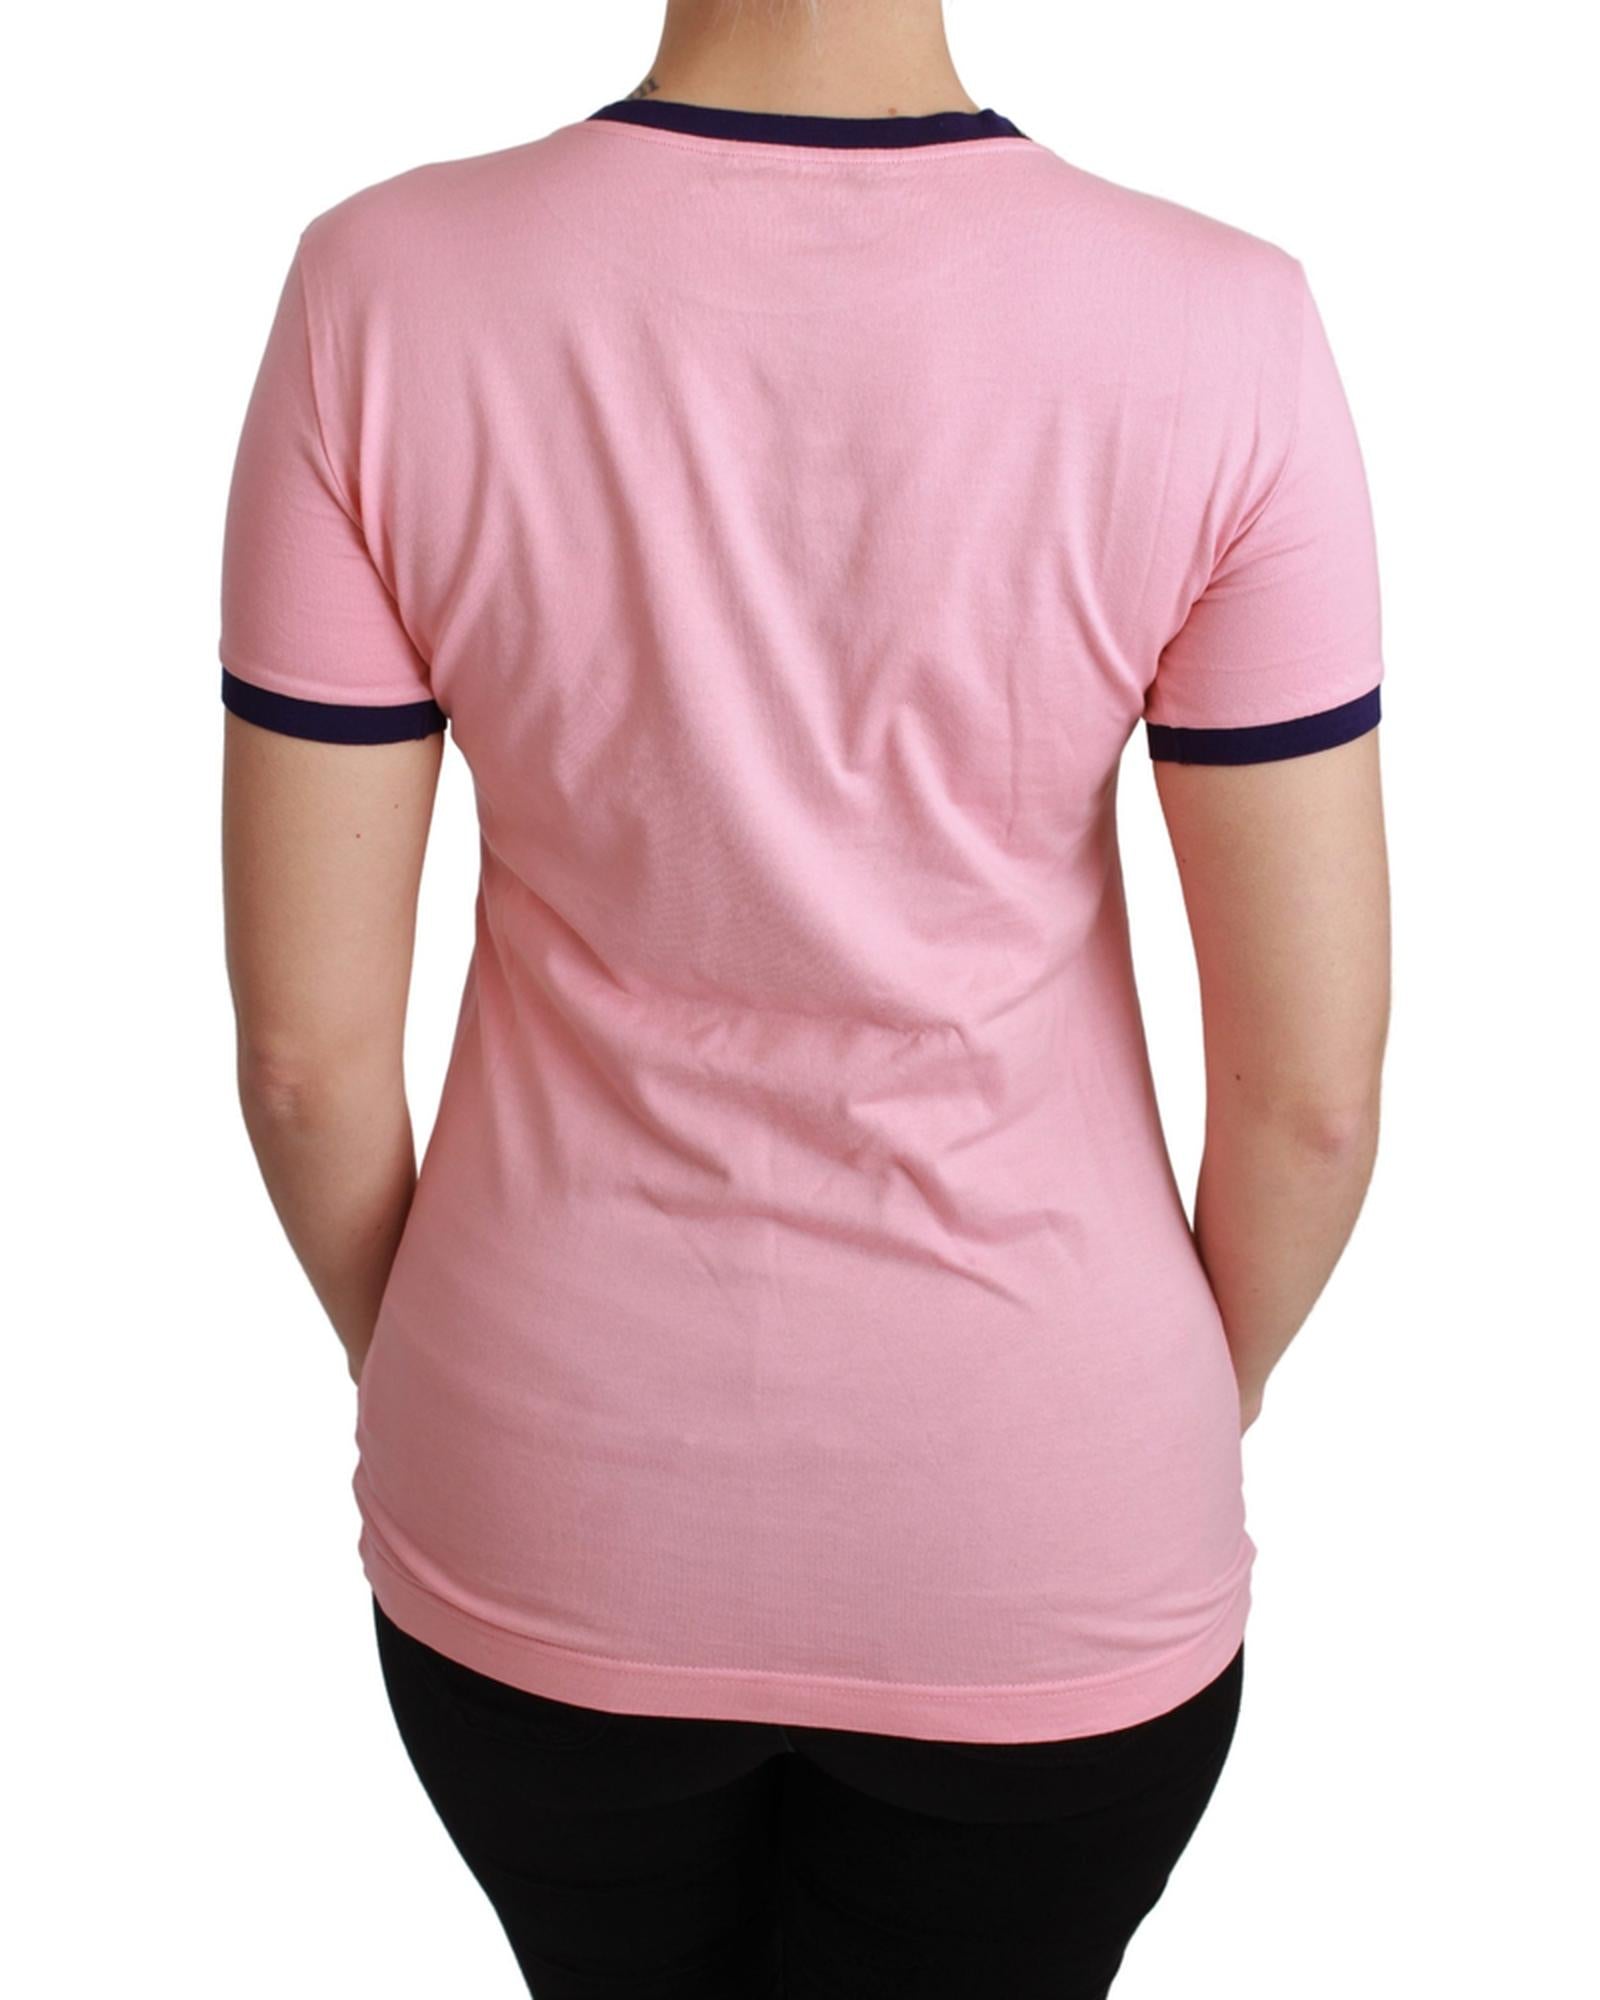 Year of the Pig 2019 Crewneck Short Sleeve T-shirt by Dolce & Gabbana 42 IT Women